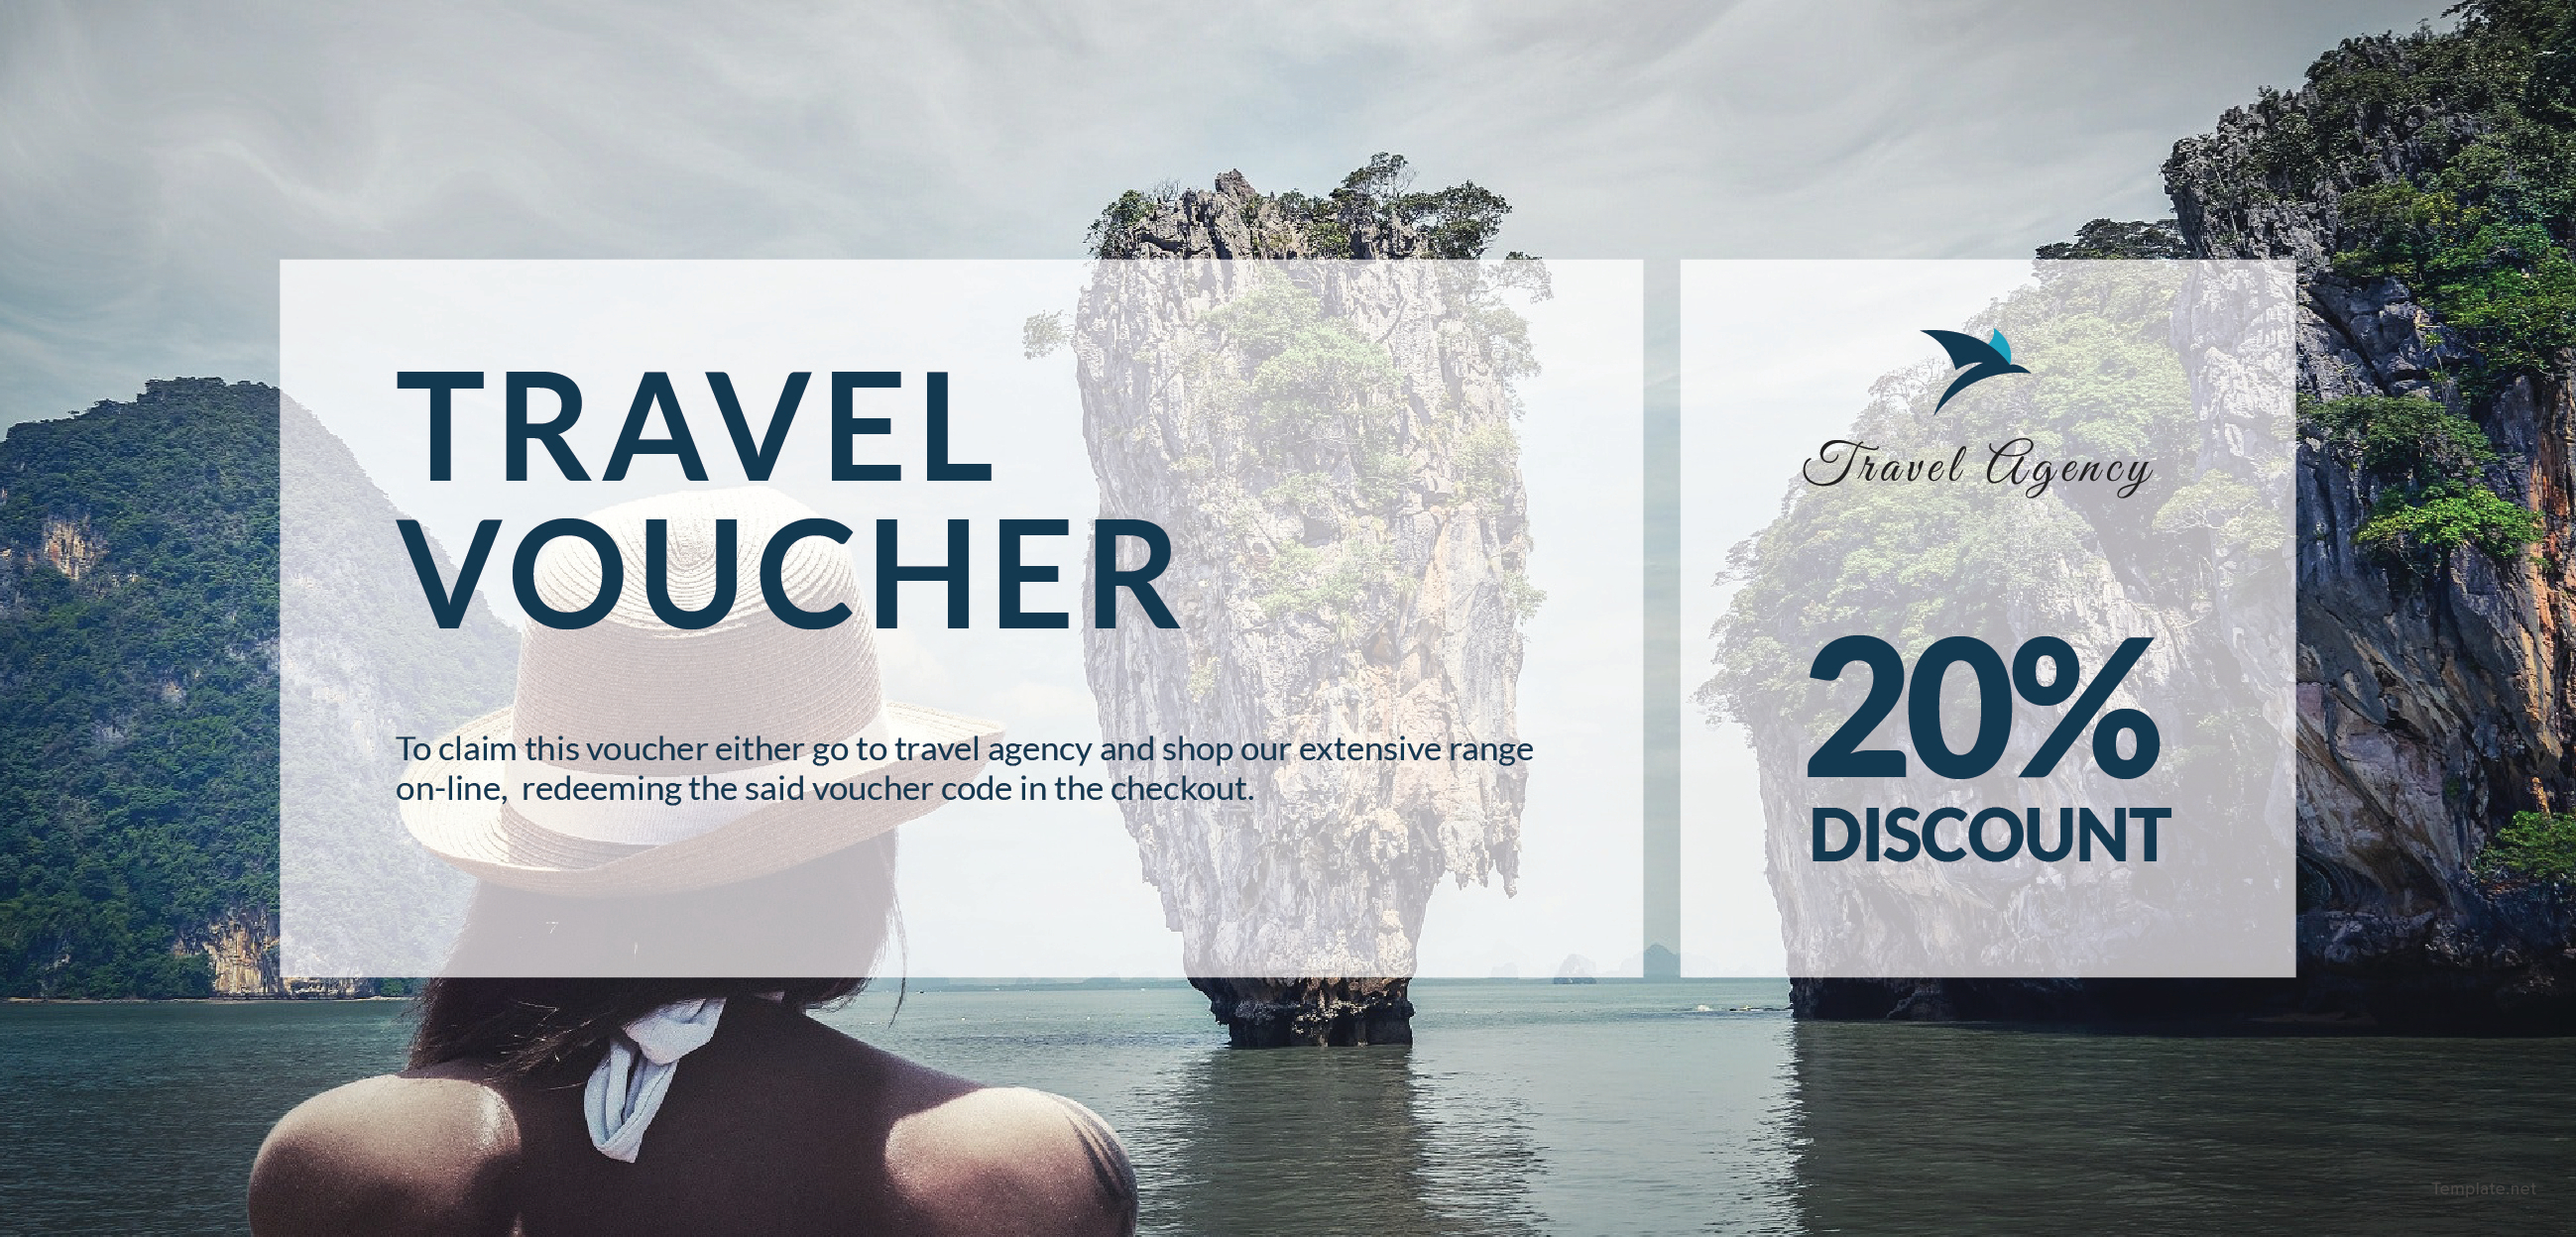 Travel Voucher Template in Adobe Illustrator